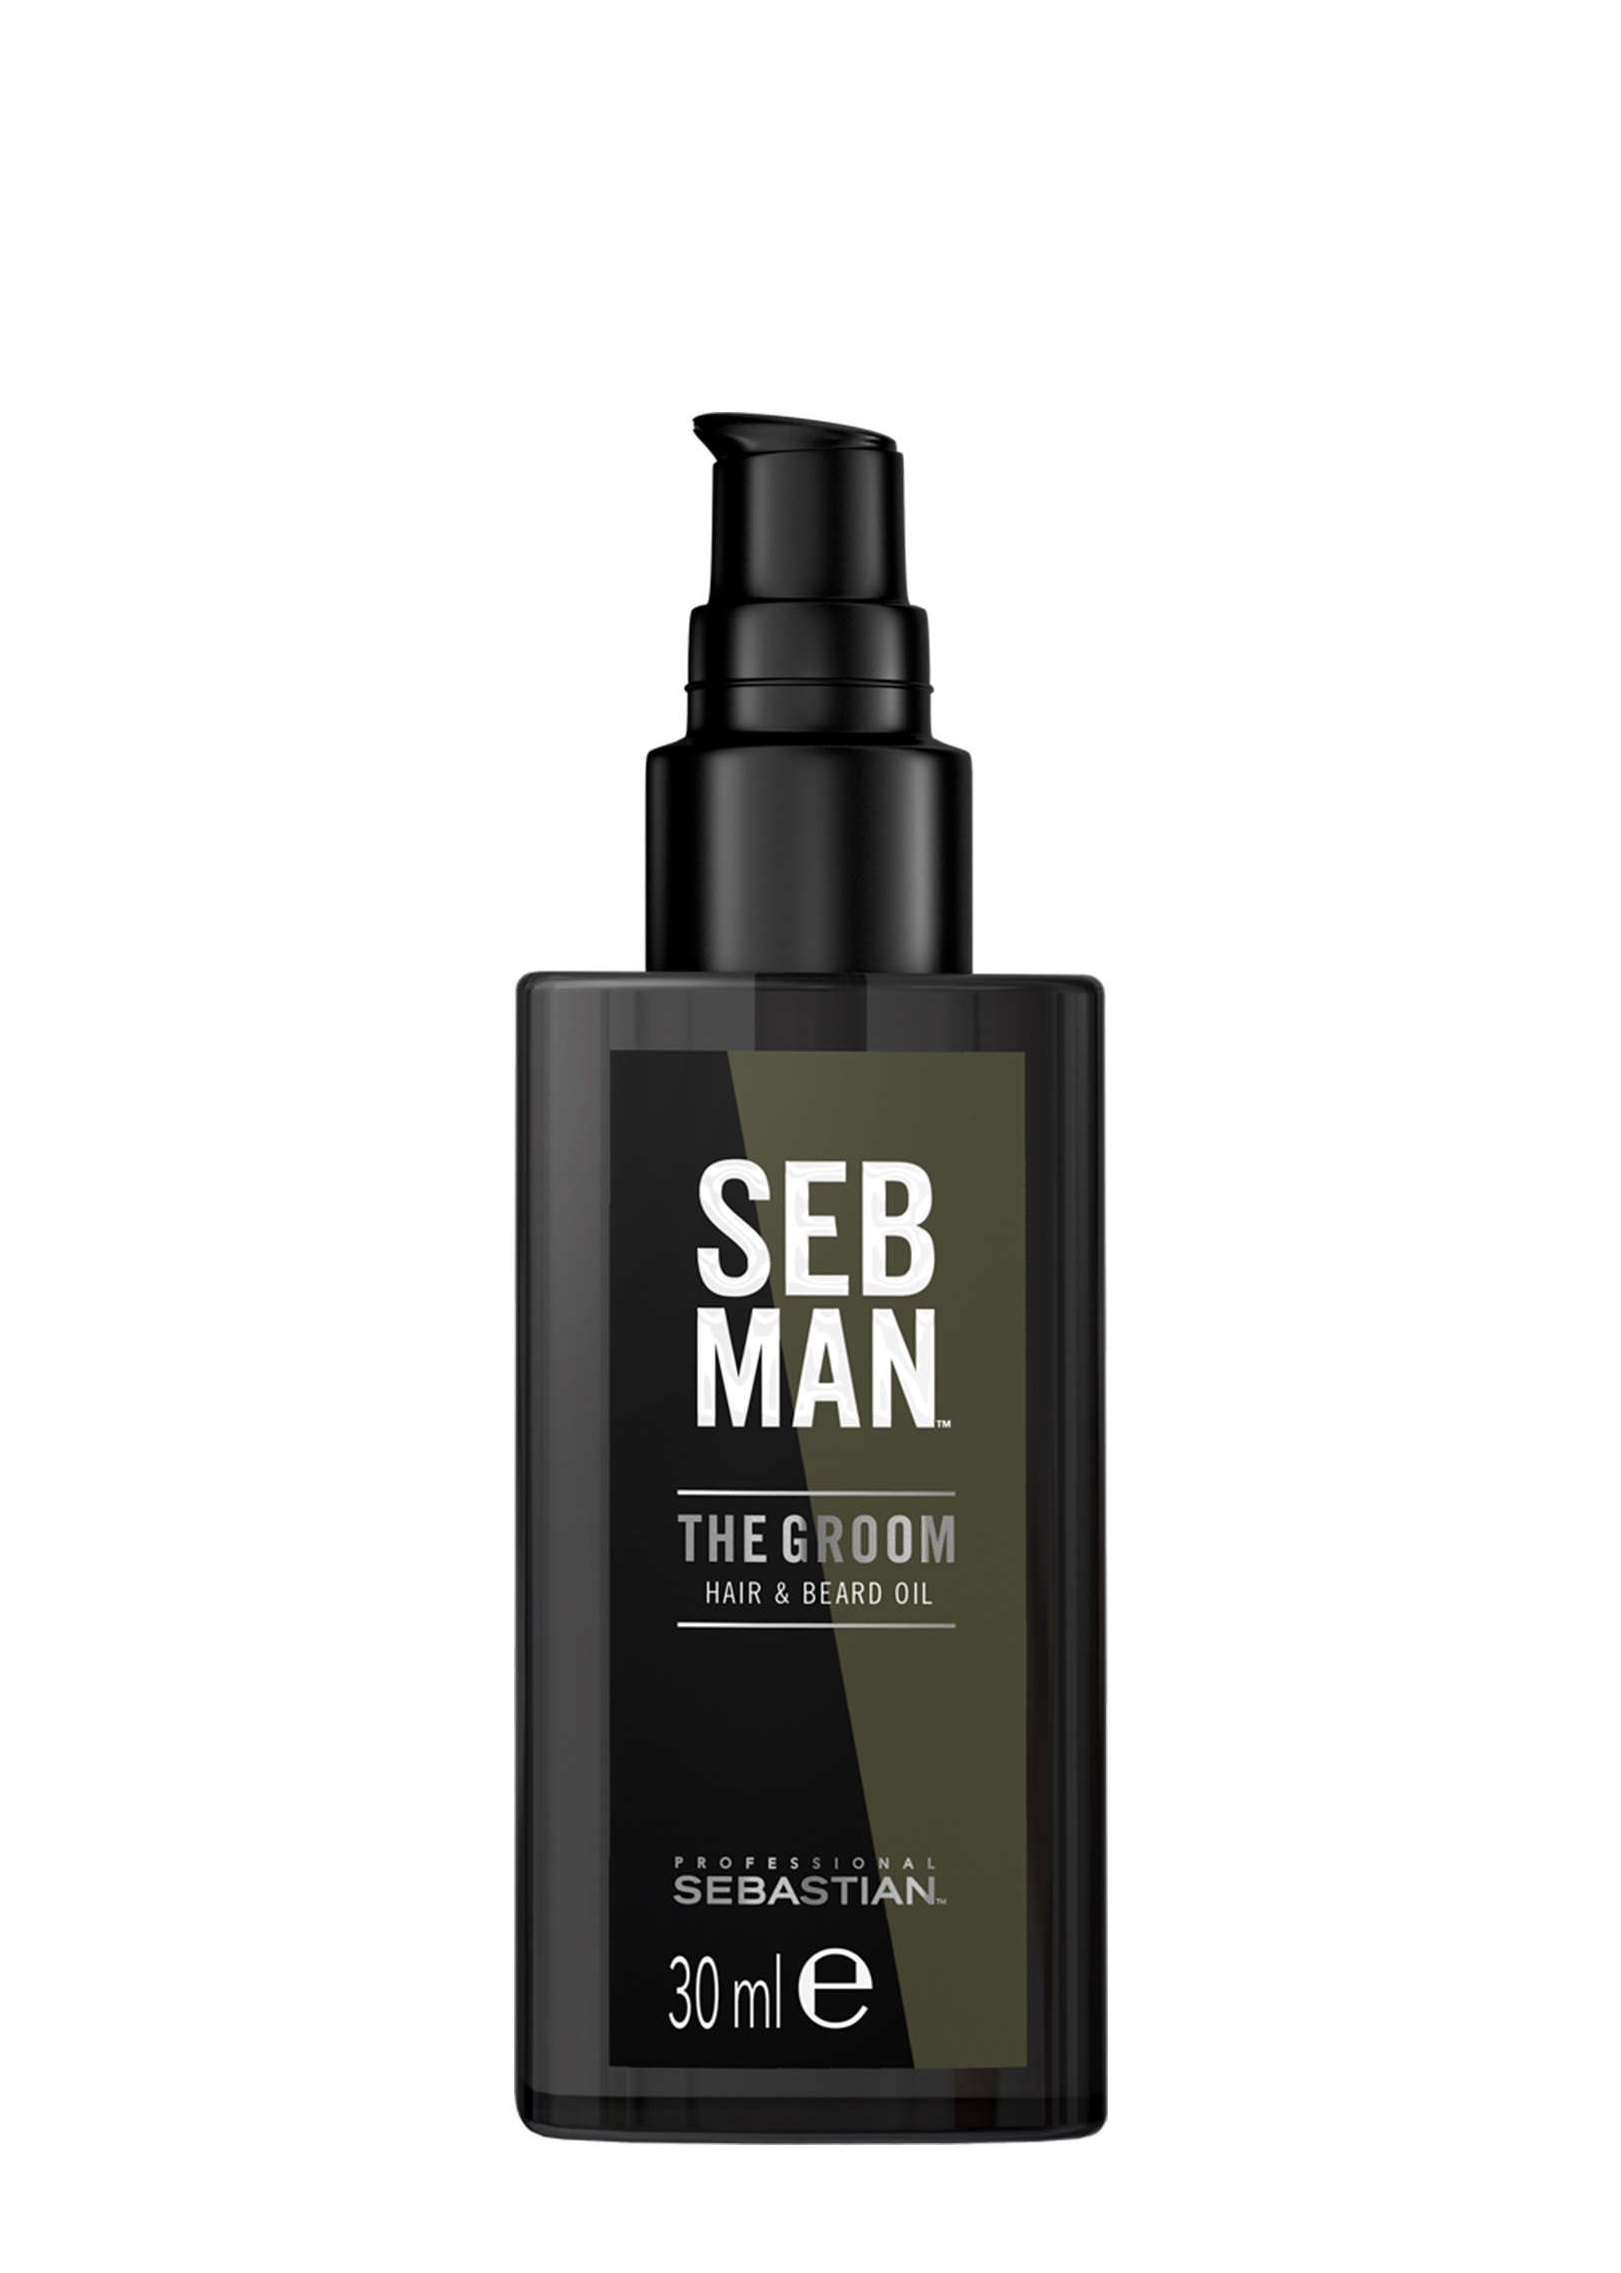 SEB MAN Масло для ухода за волосами и бородой / THE GROOM 30